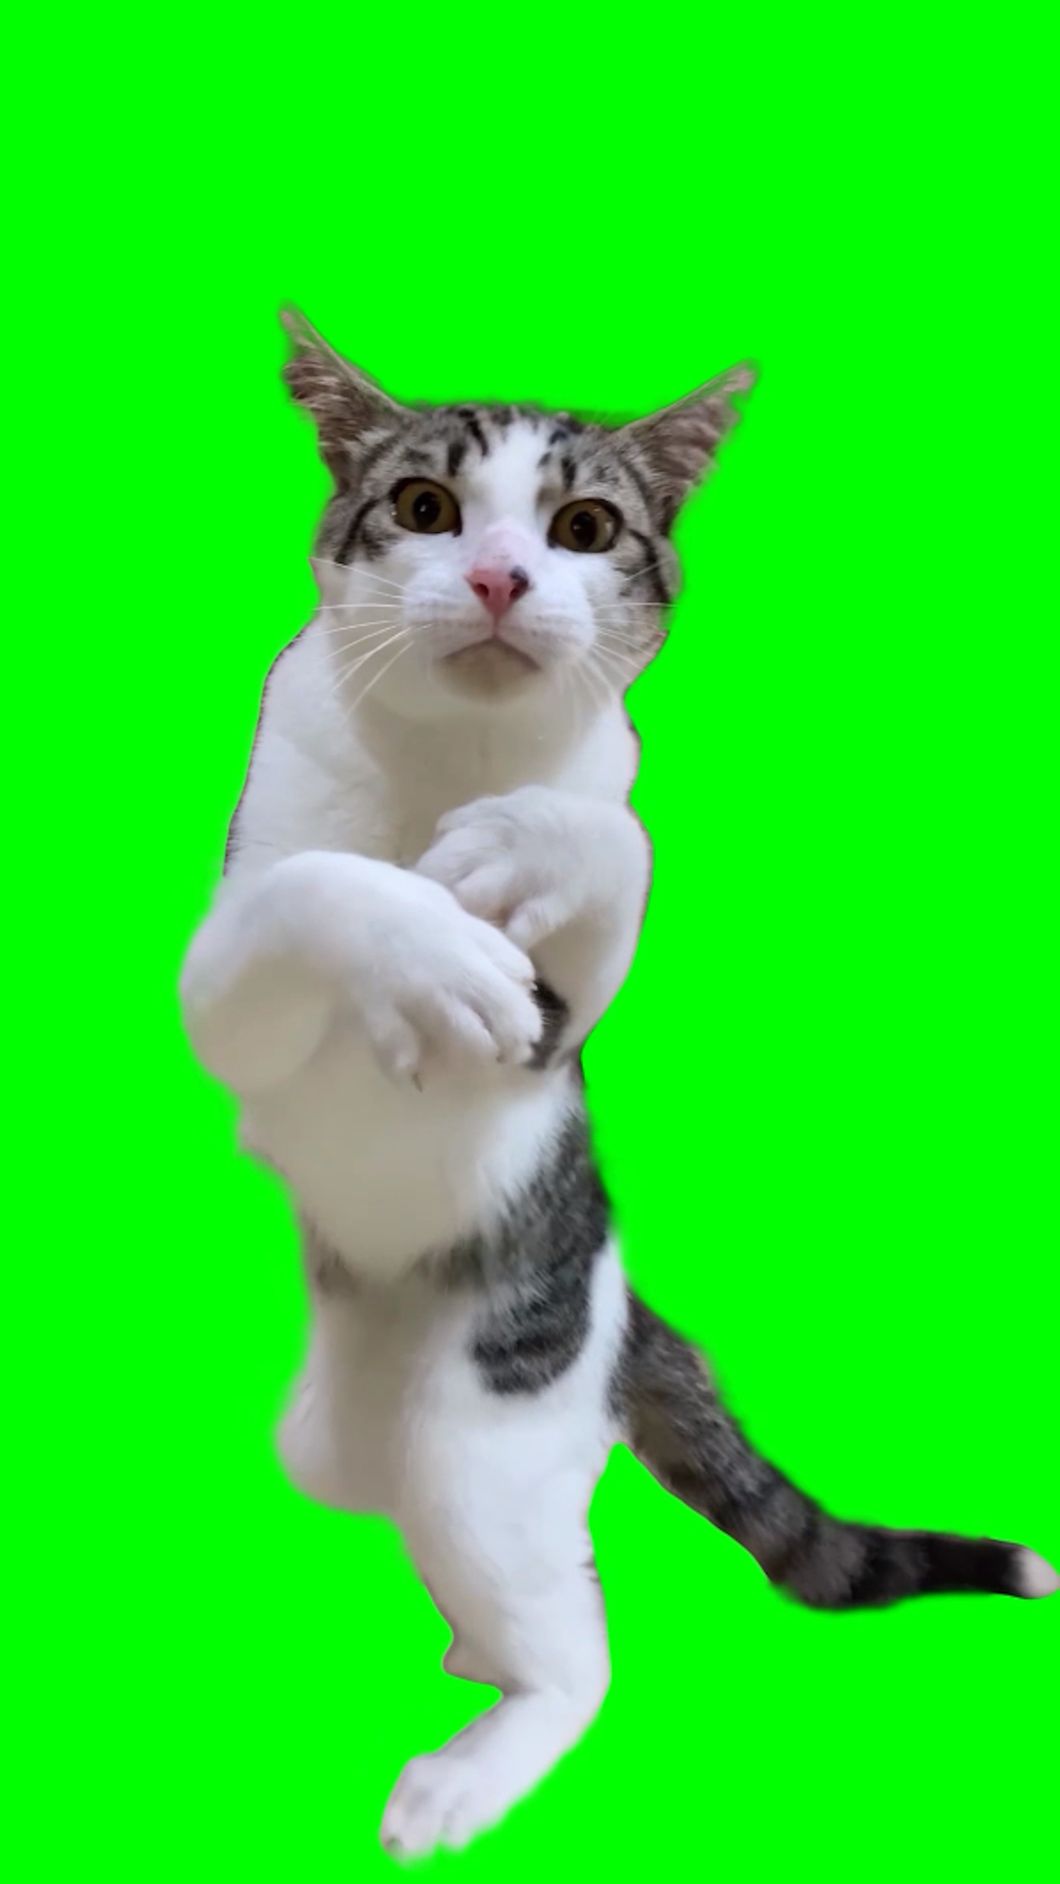 Cat boxing meme Part 2 (Green Screen)